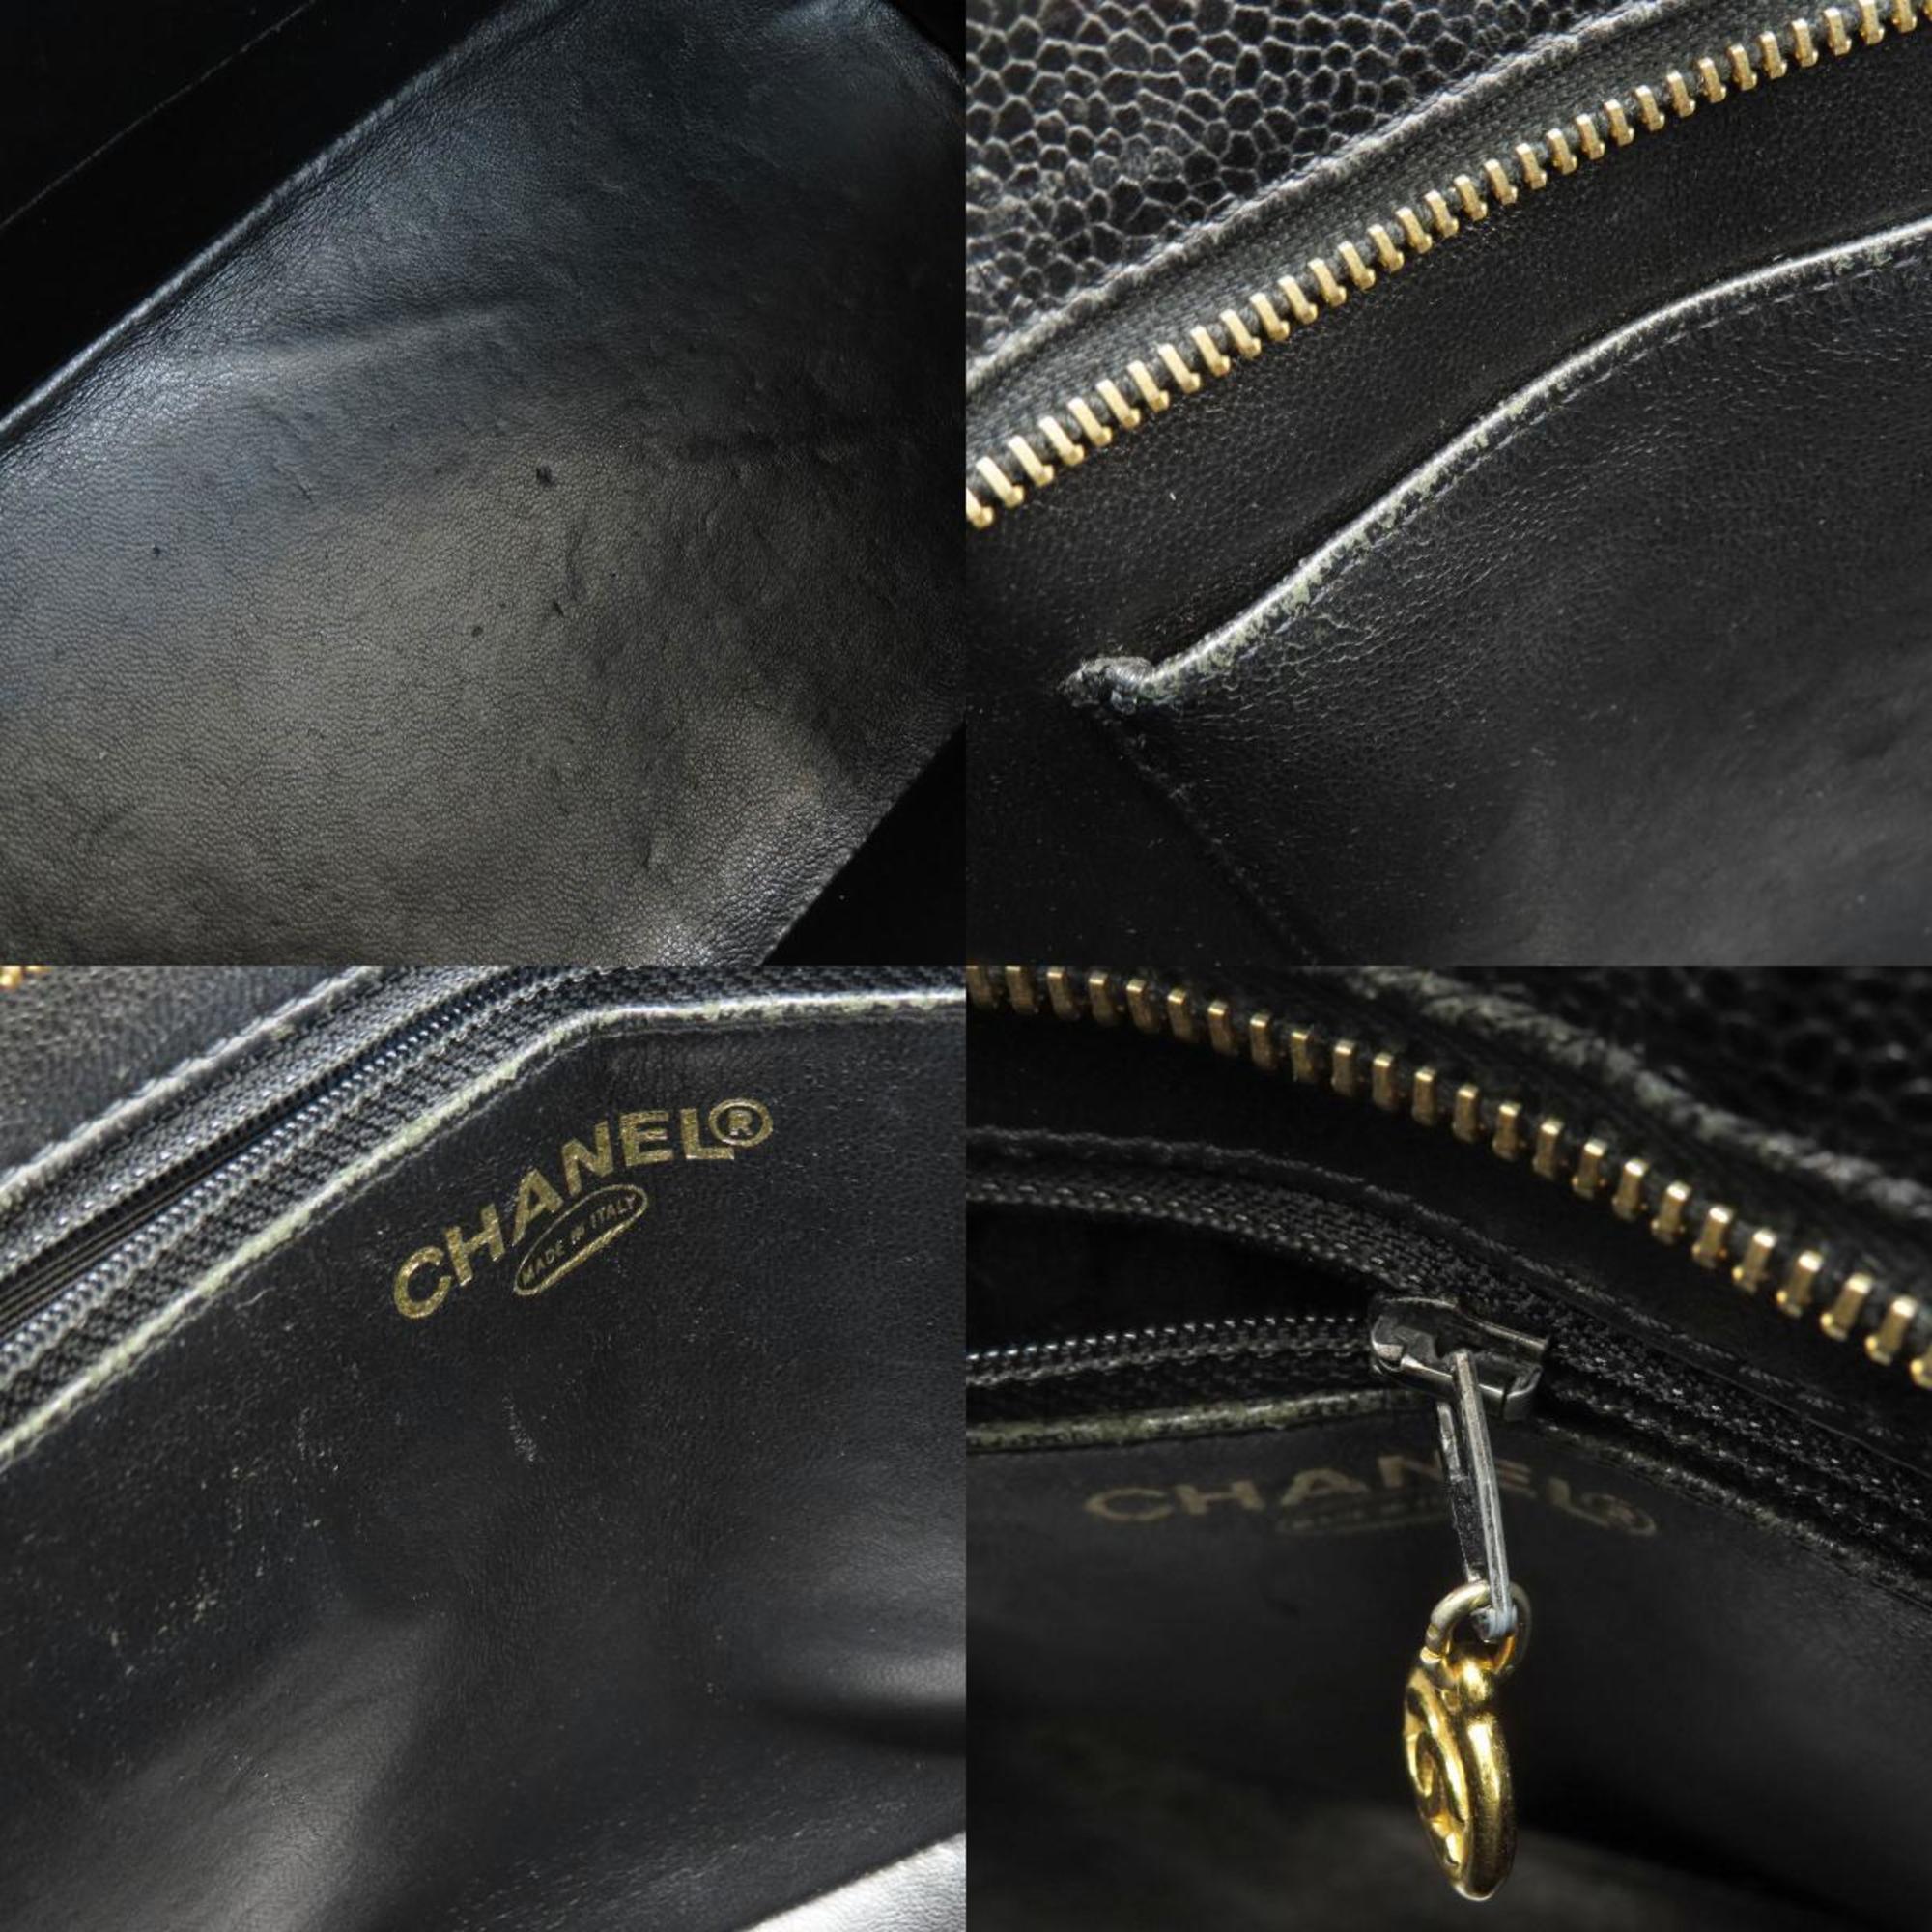 Chanel Reproduction Tote Bag Caviar Skin Women's